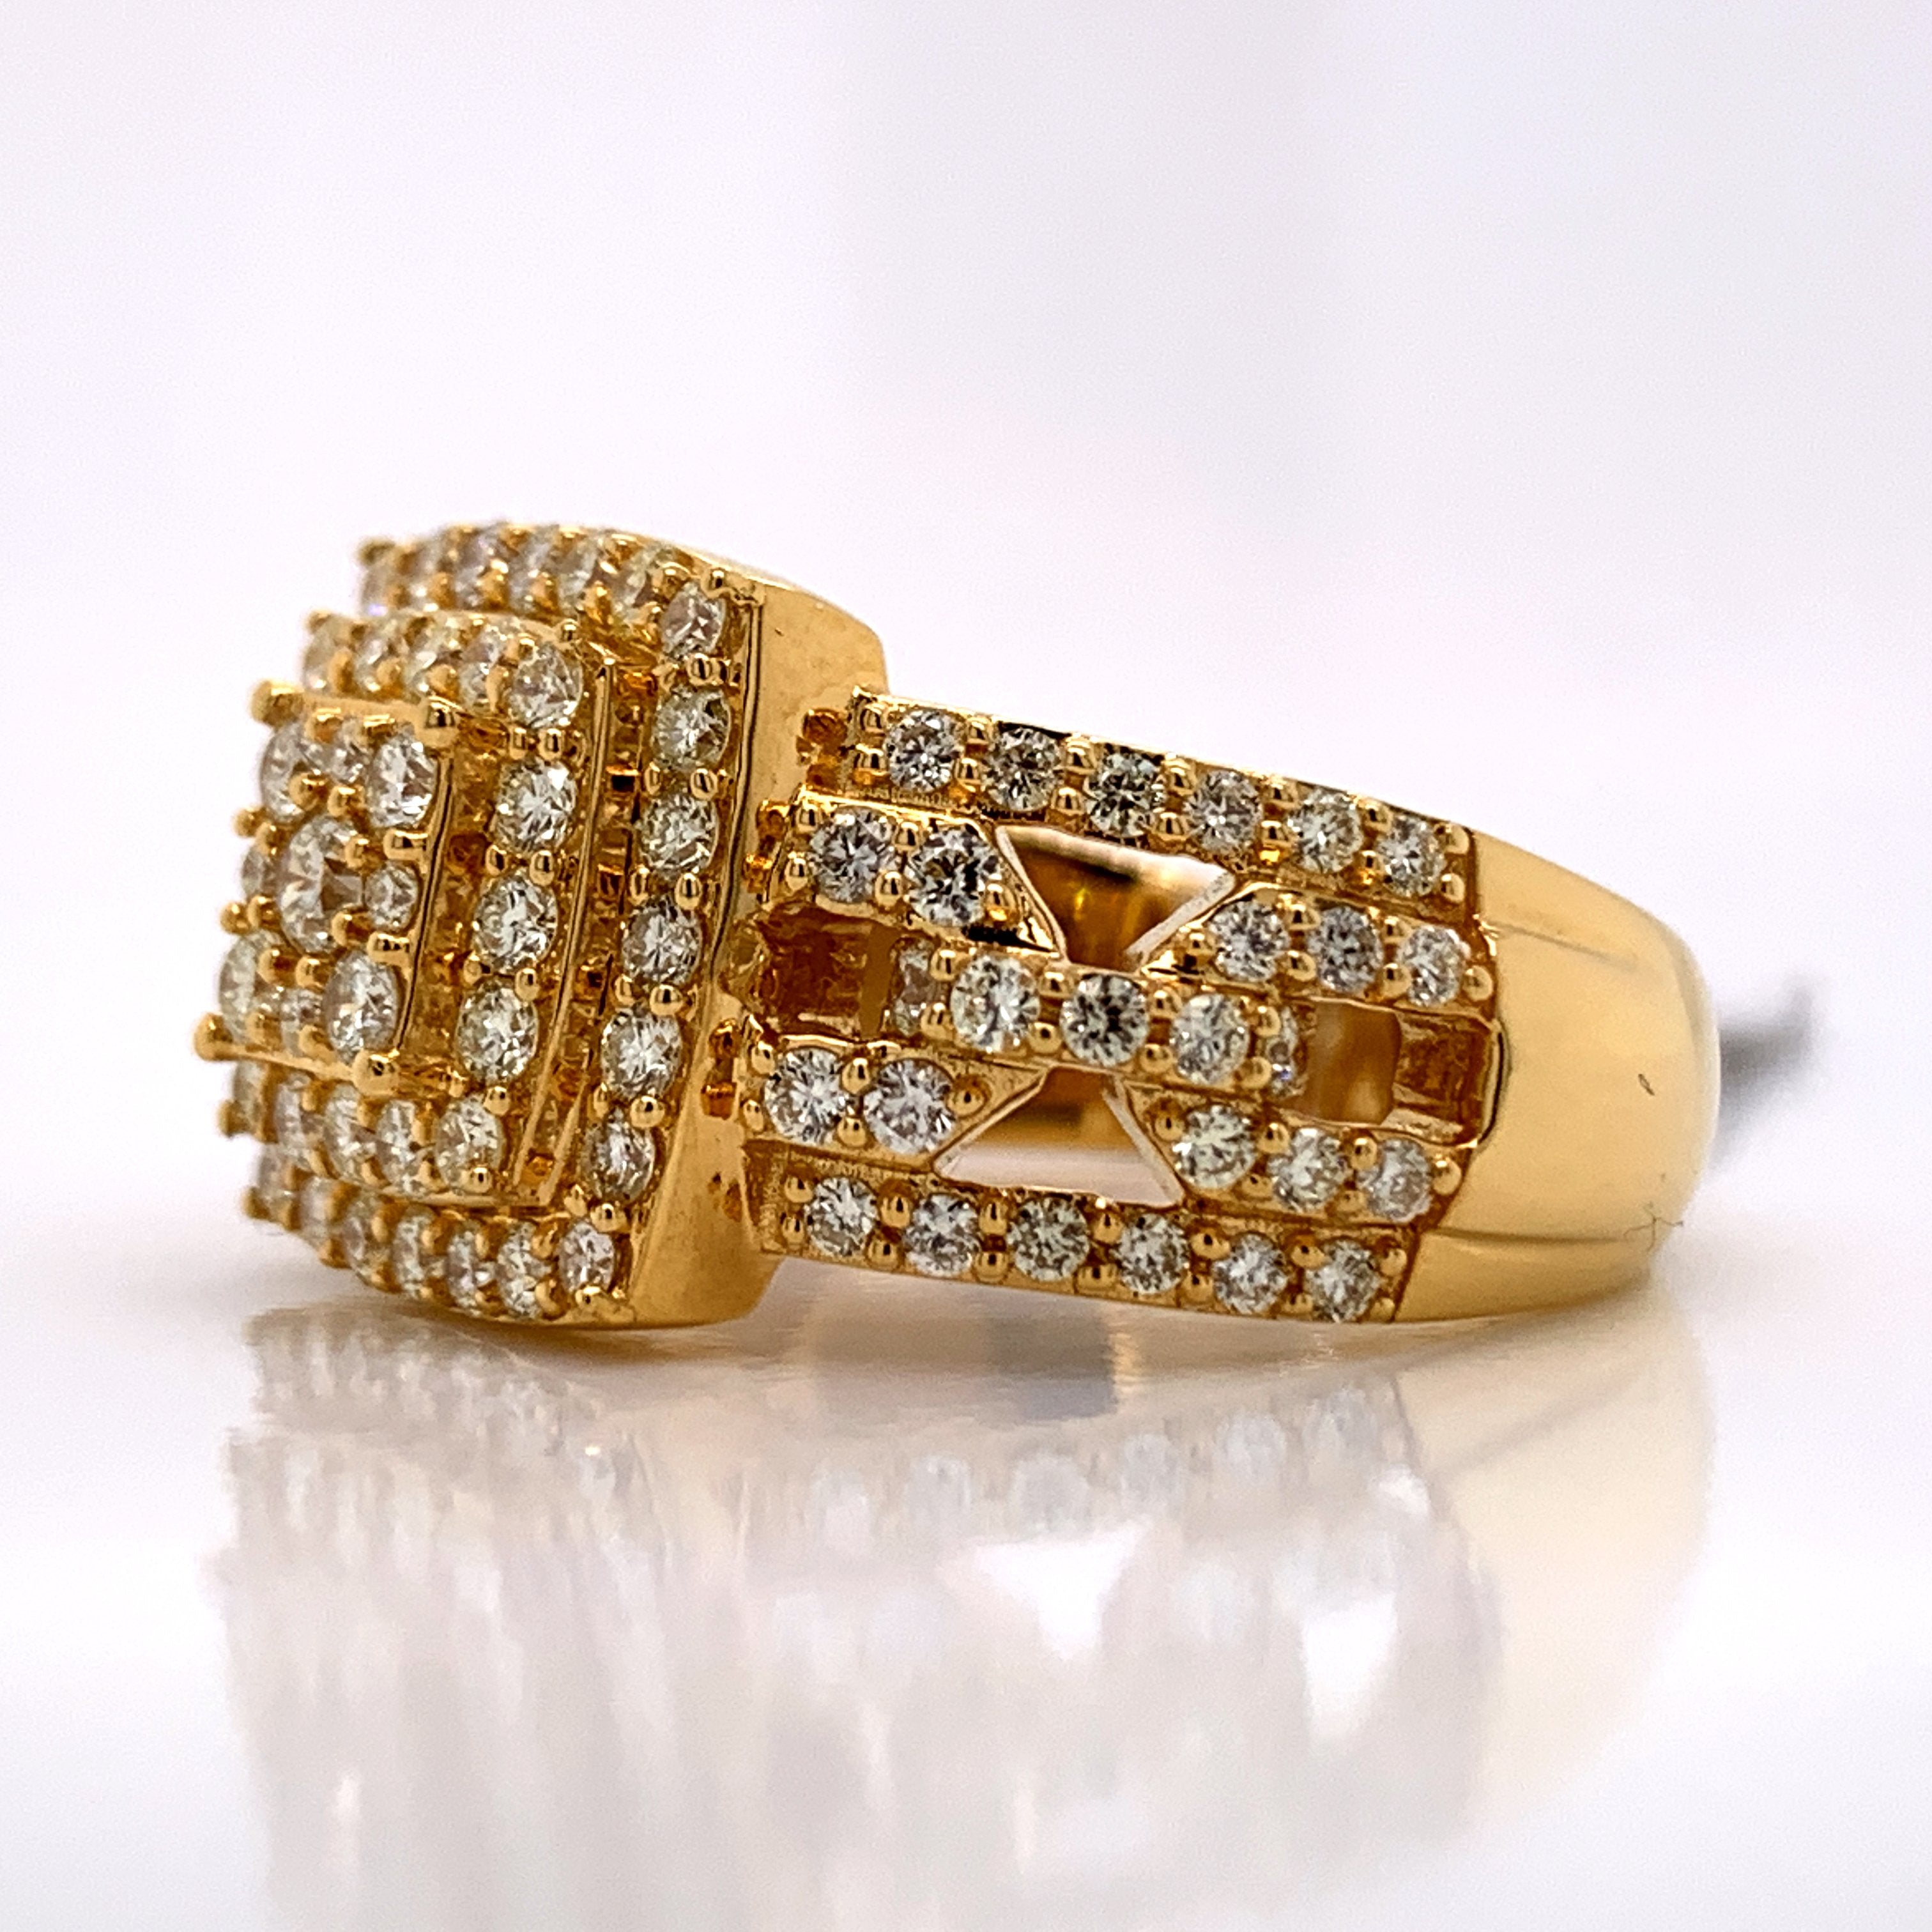 1.47CT Diamond 10K Gold Ring - White Carat Diamonds 